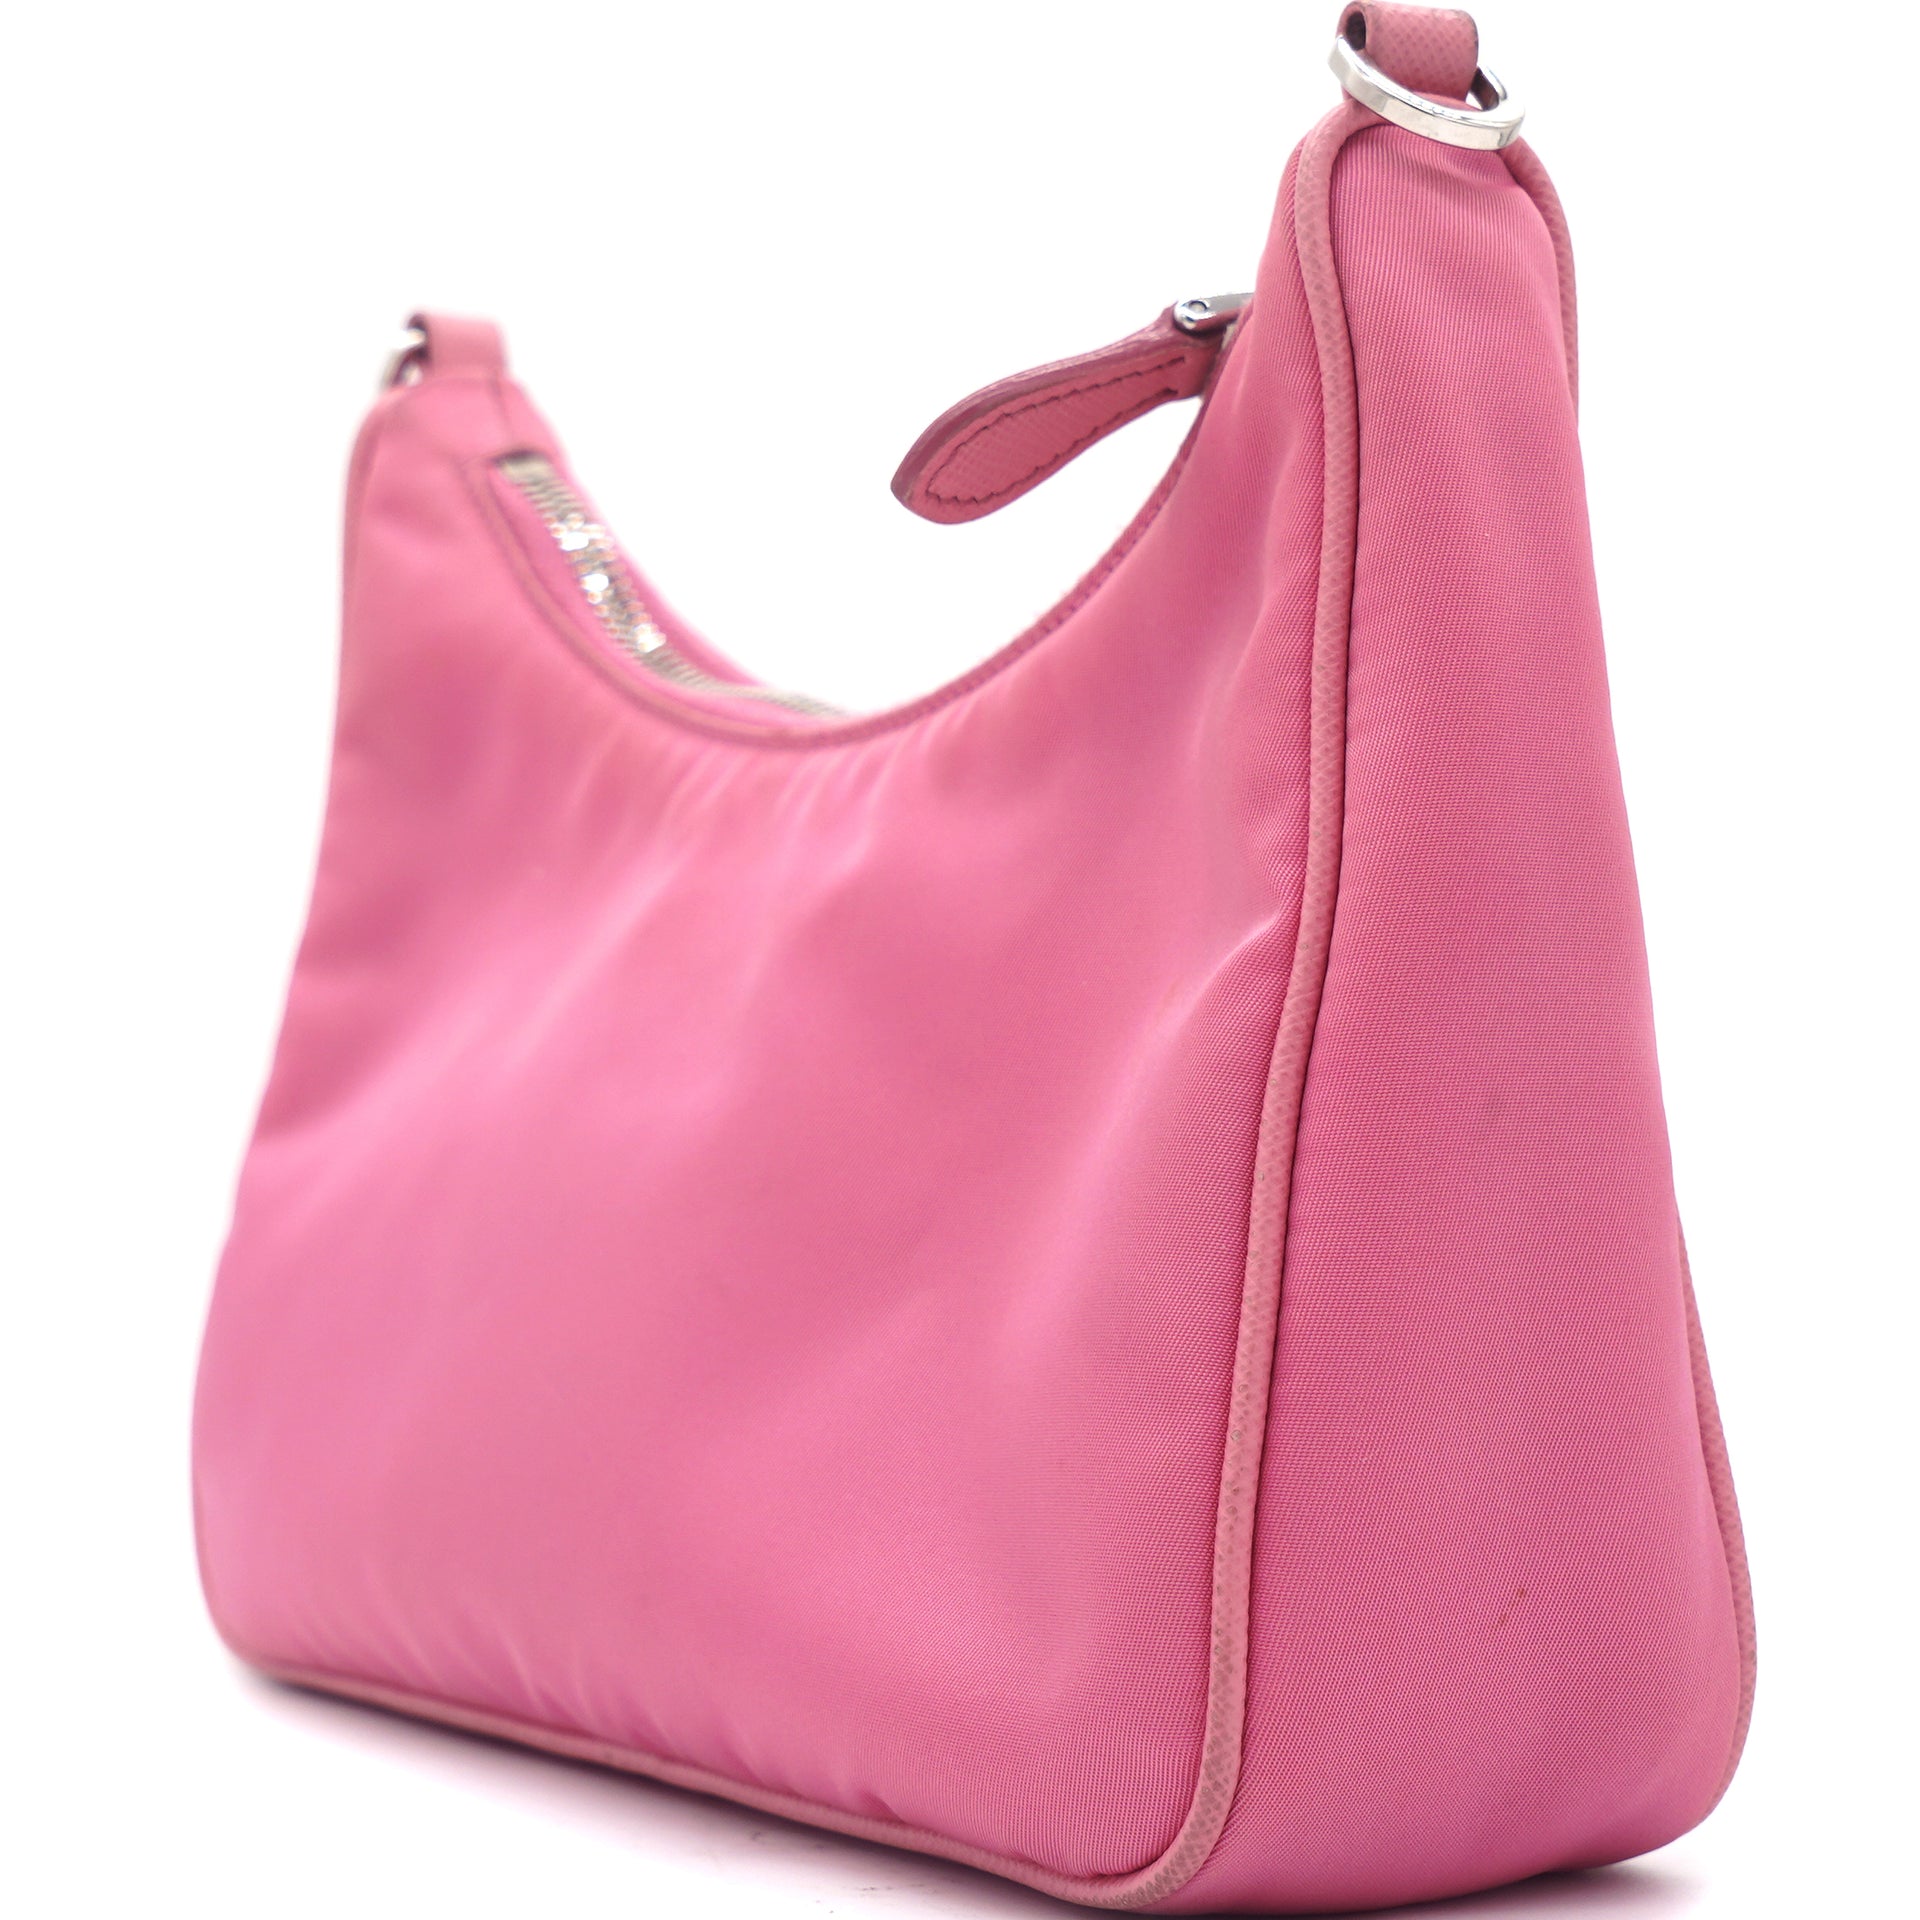 Prada Pink Tessuto Re-Edition 2005 Bag